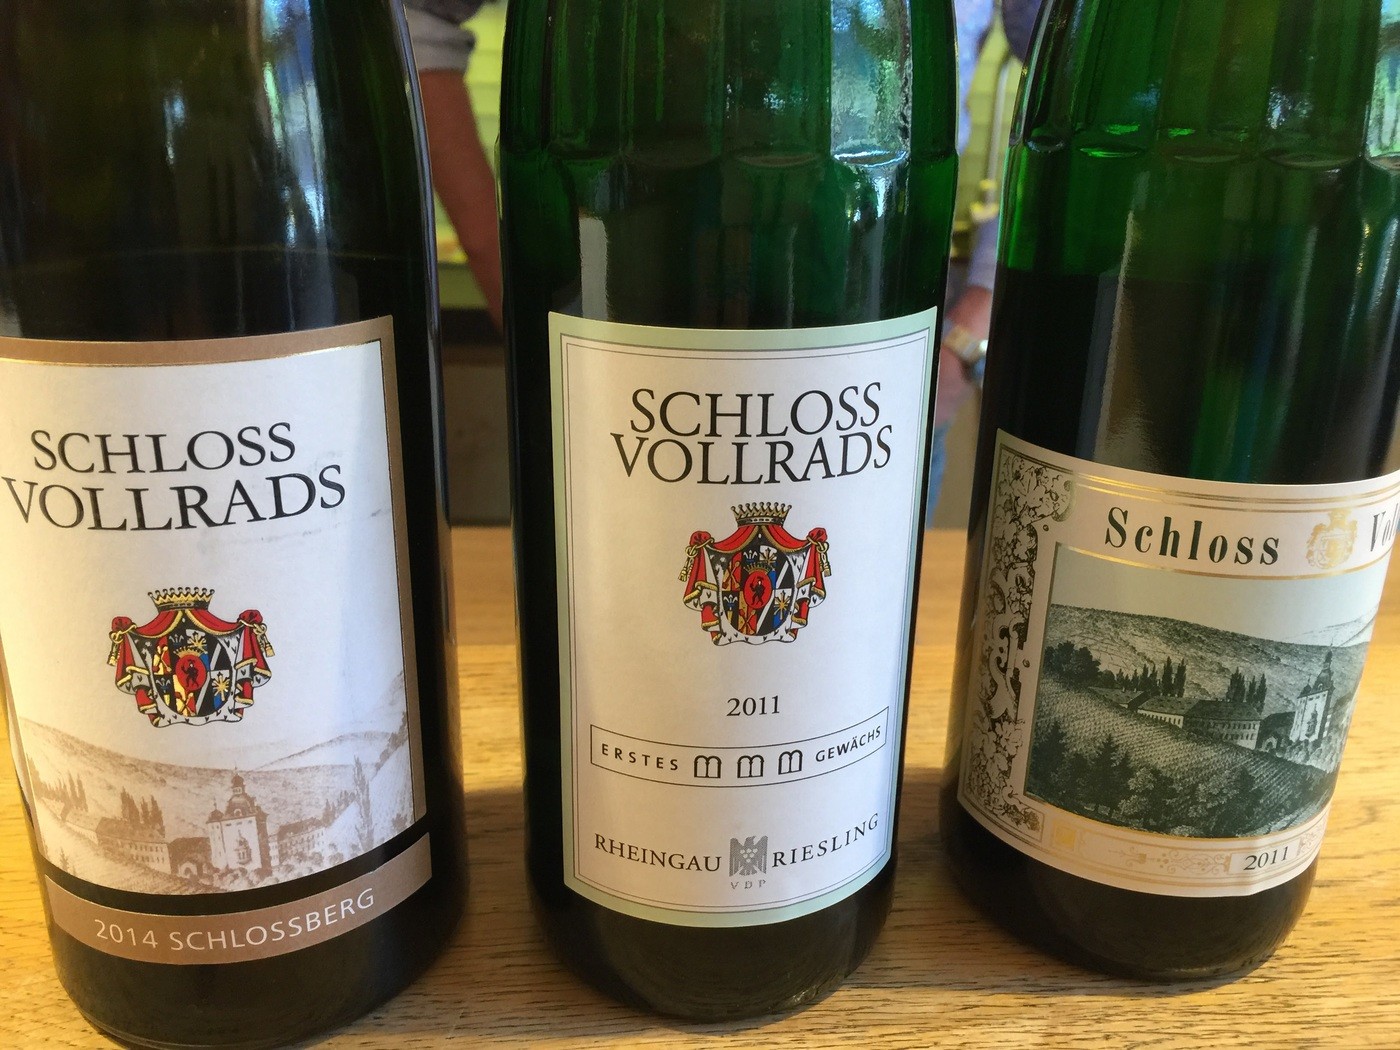 Three wine bottles from Schloss Vollrads